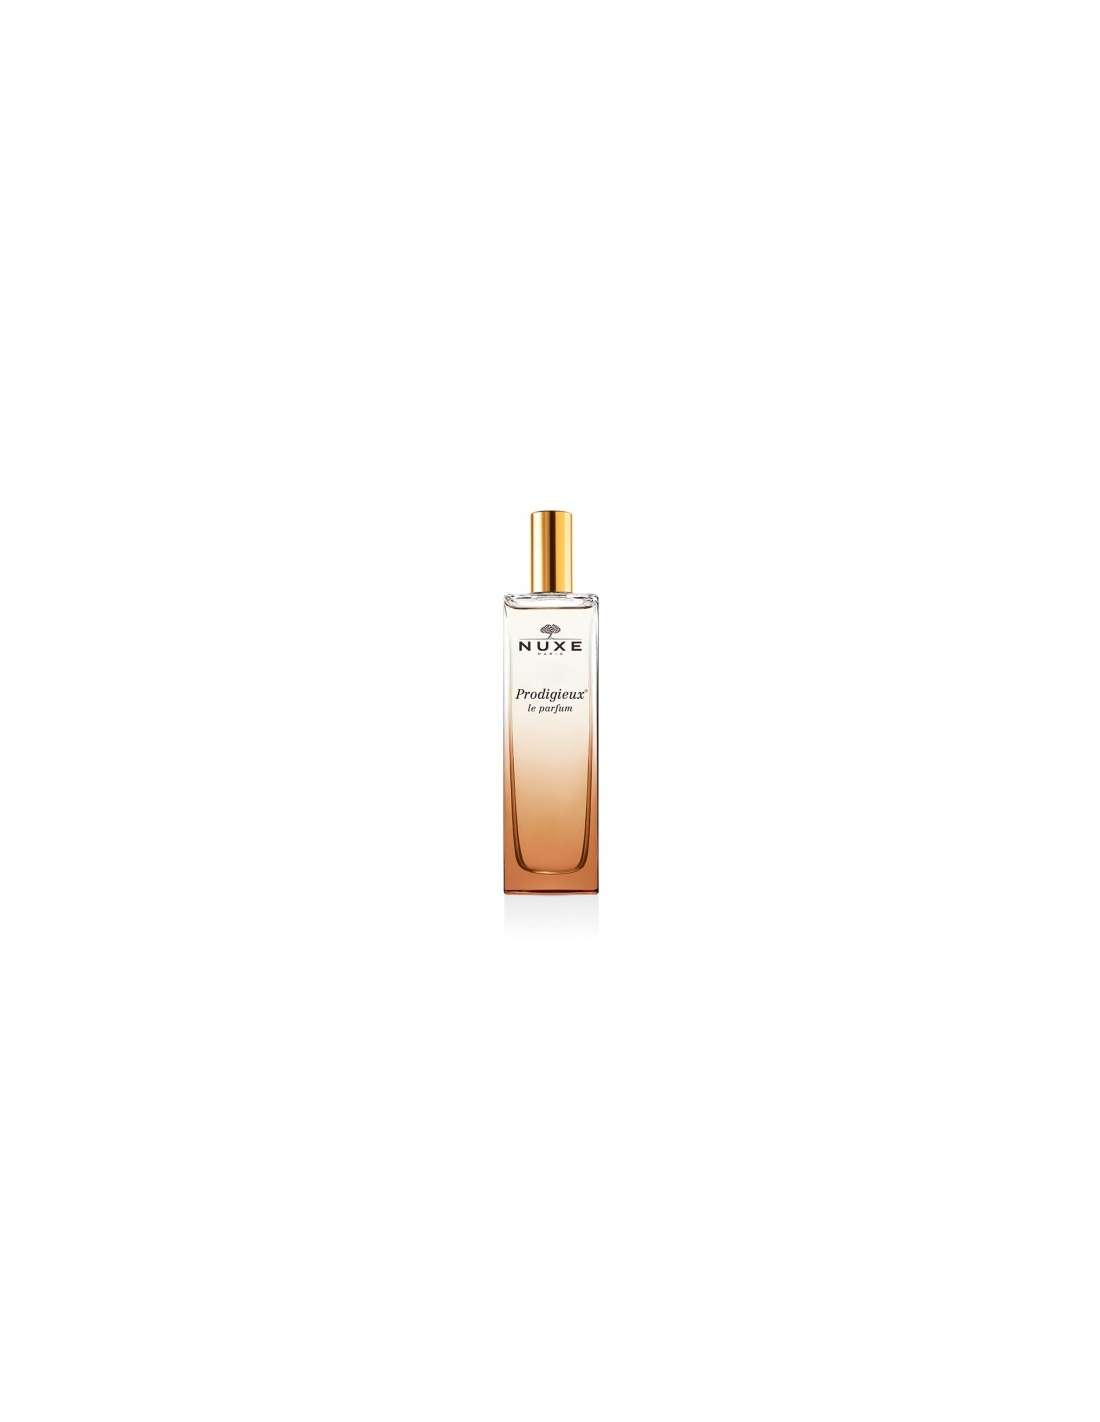 Perfume Nuxe Prodigious 30ml - Notes of Orange Blossom, Magnolia & Va | Eau de Parfum